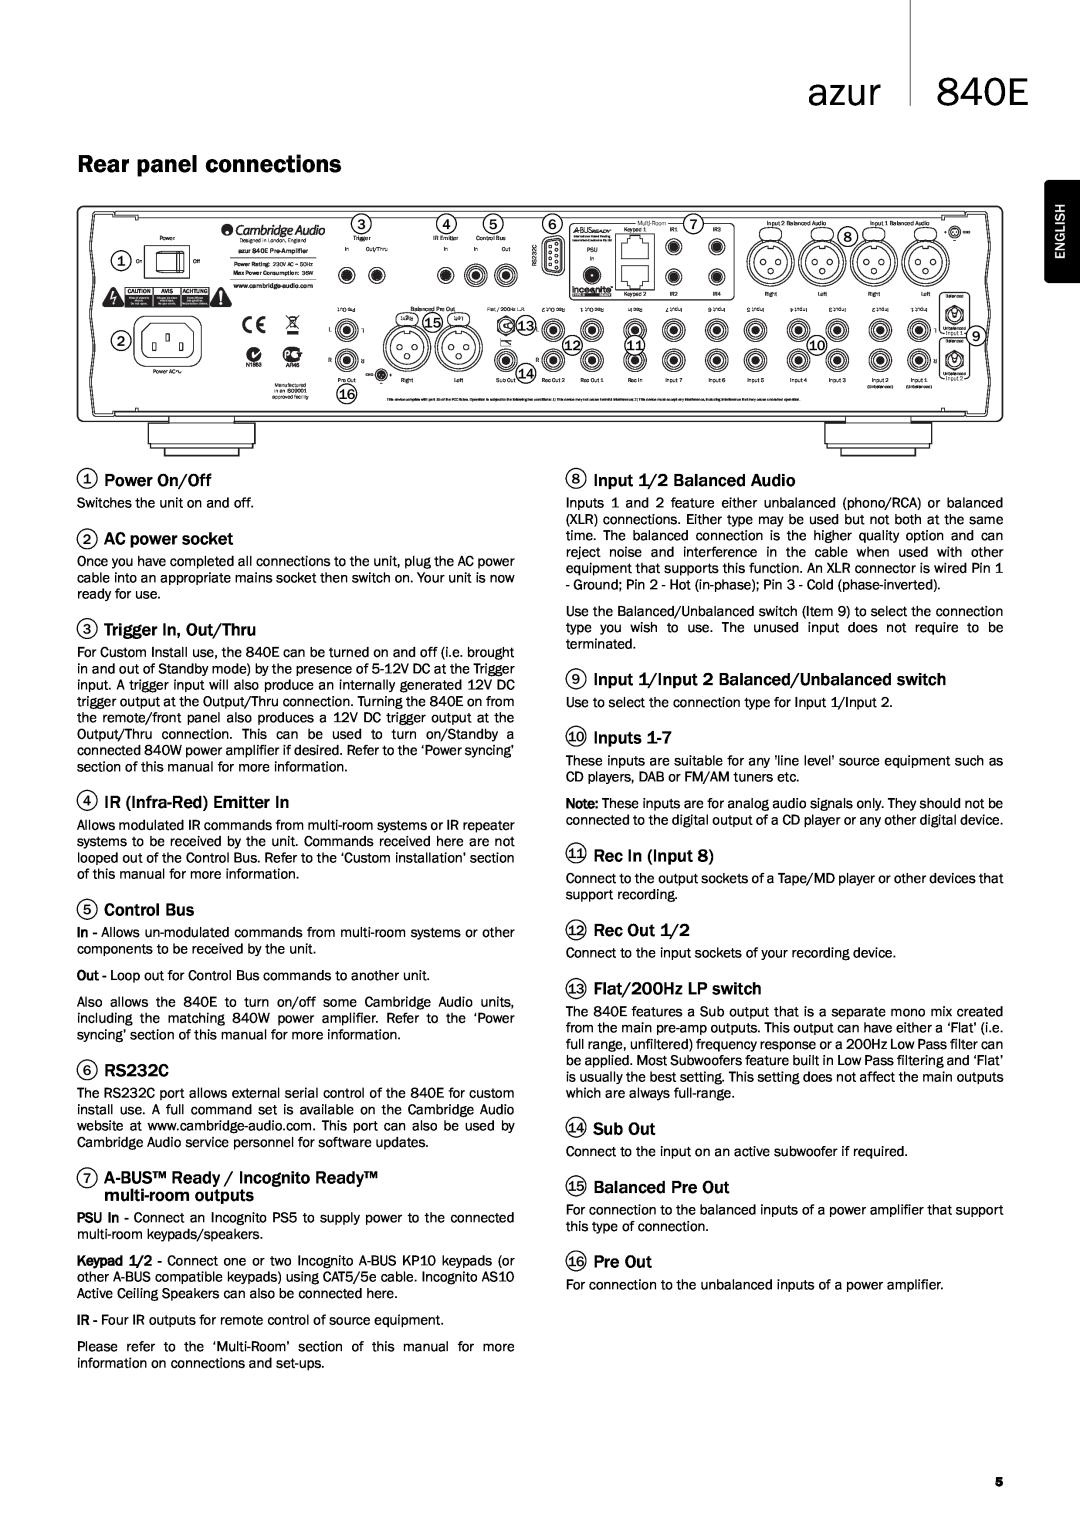 Cambridge Audio Azur 840E user manual Rear panel connections, azur 840E 